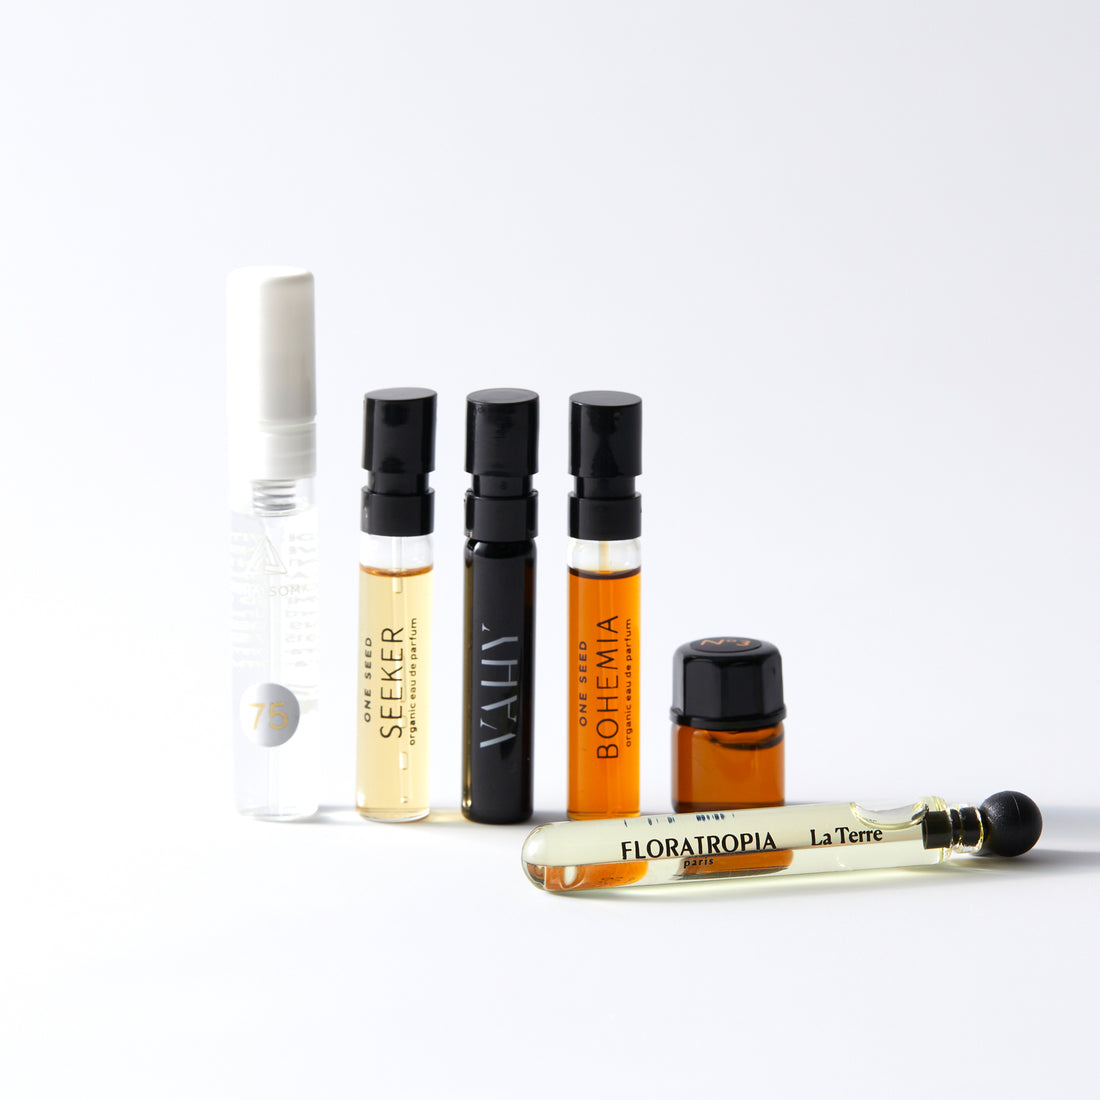 Travel-size perfume samples